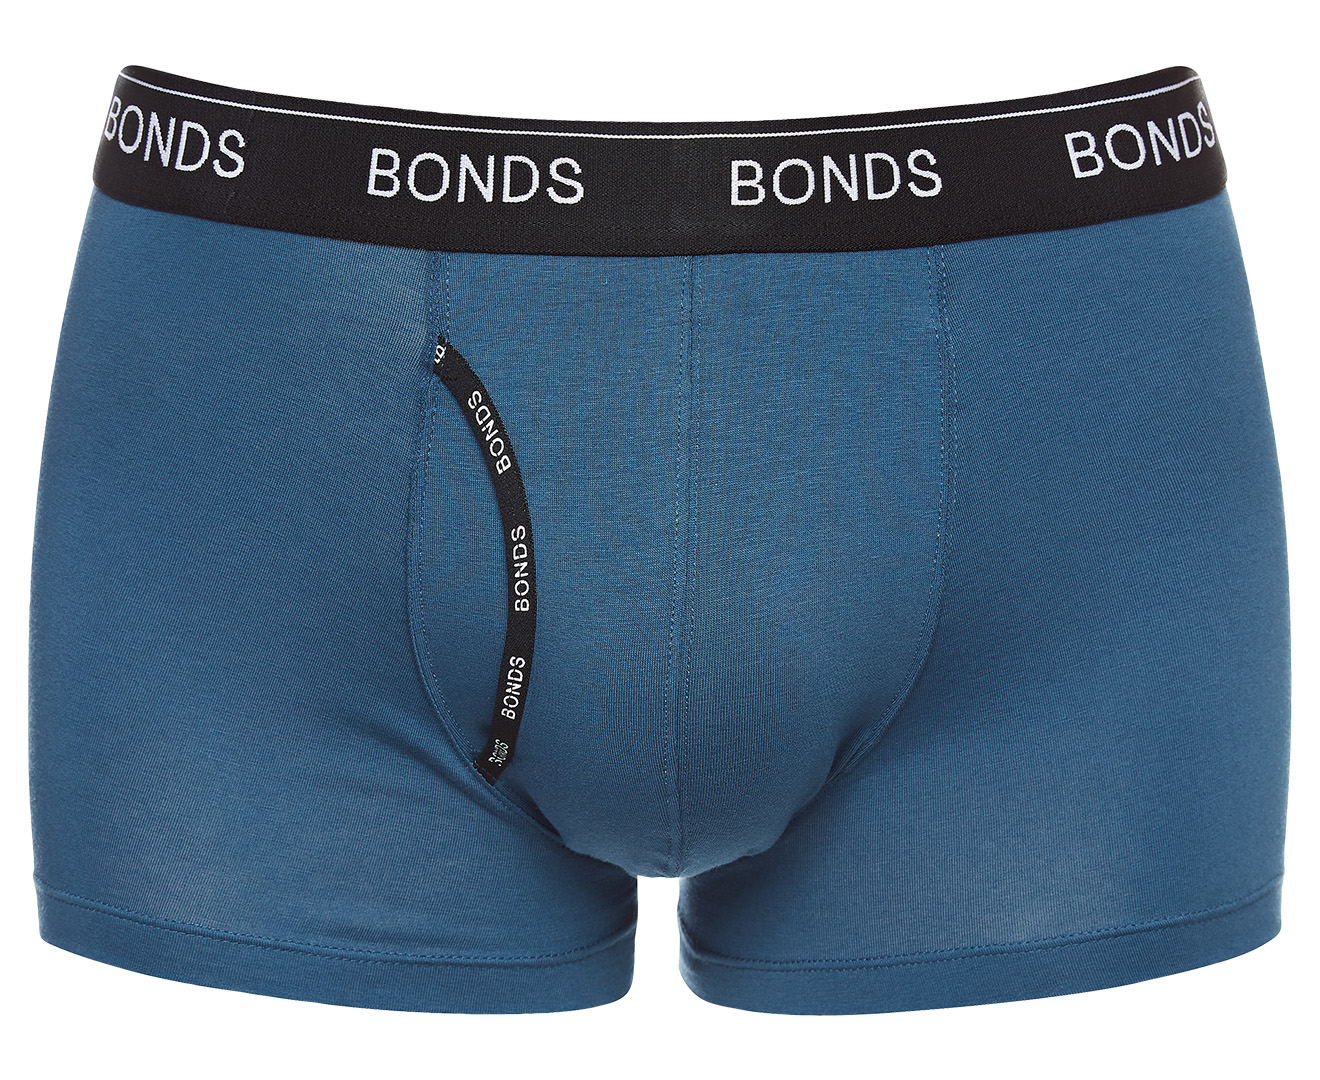 9 x Mens Bonds Guyfront Trunks Underwear Charcoal/Black Stripe, Black,  Charcoal